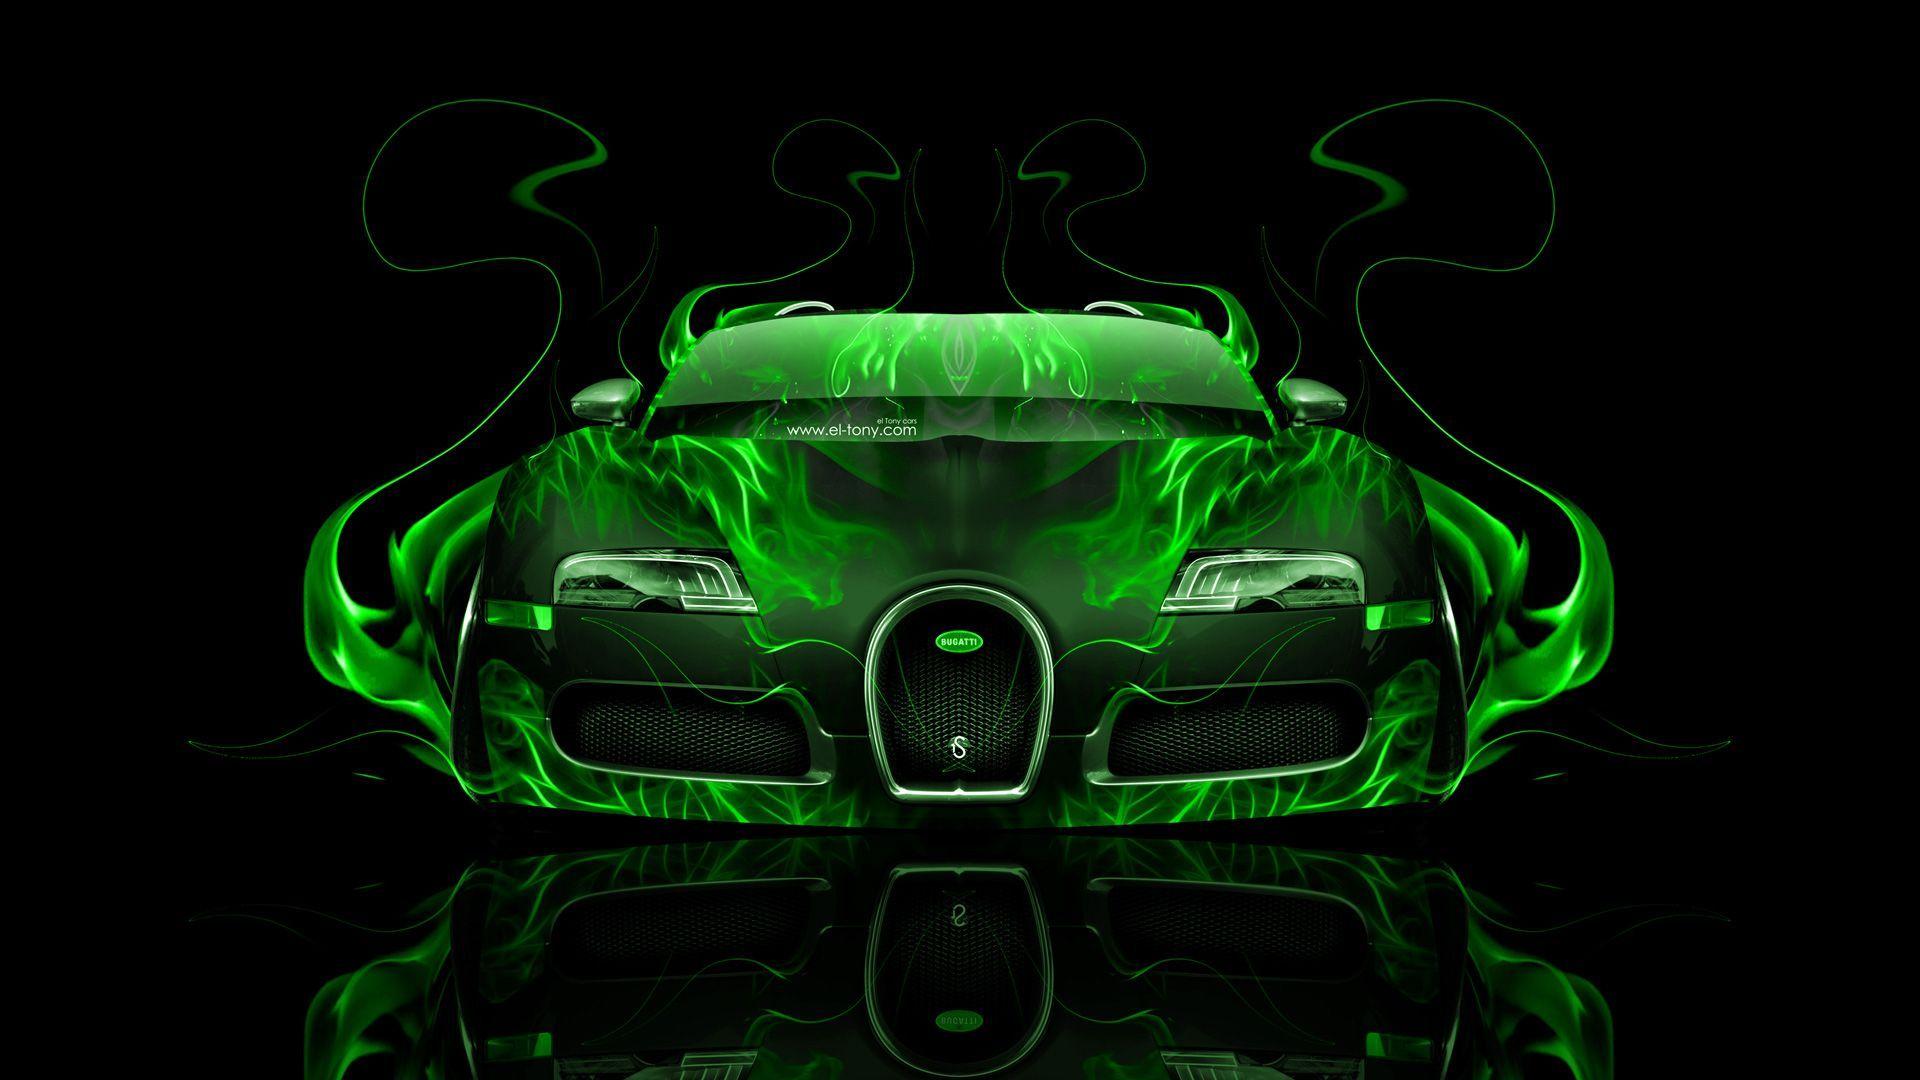 bugatti veyron front water car 2014 green neon design by tony kokhan Car Picture. Bugatti wallpaper, Cool wallpaper cars, Bugatti veyron